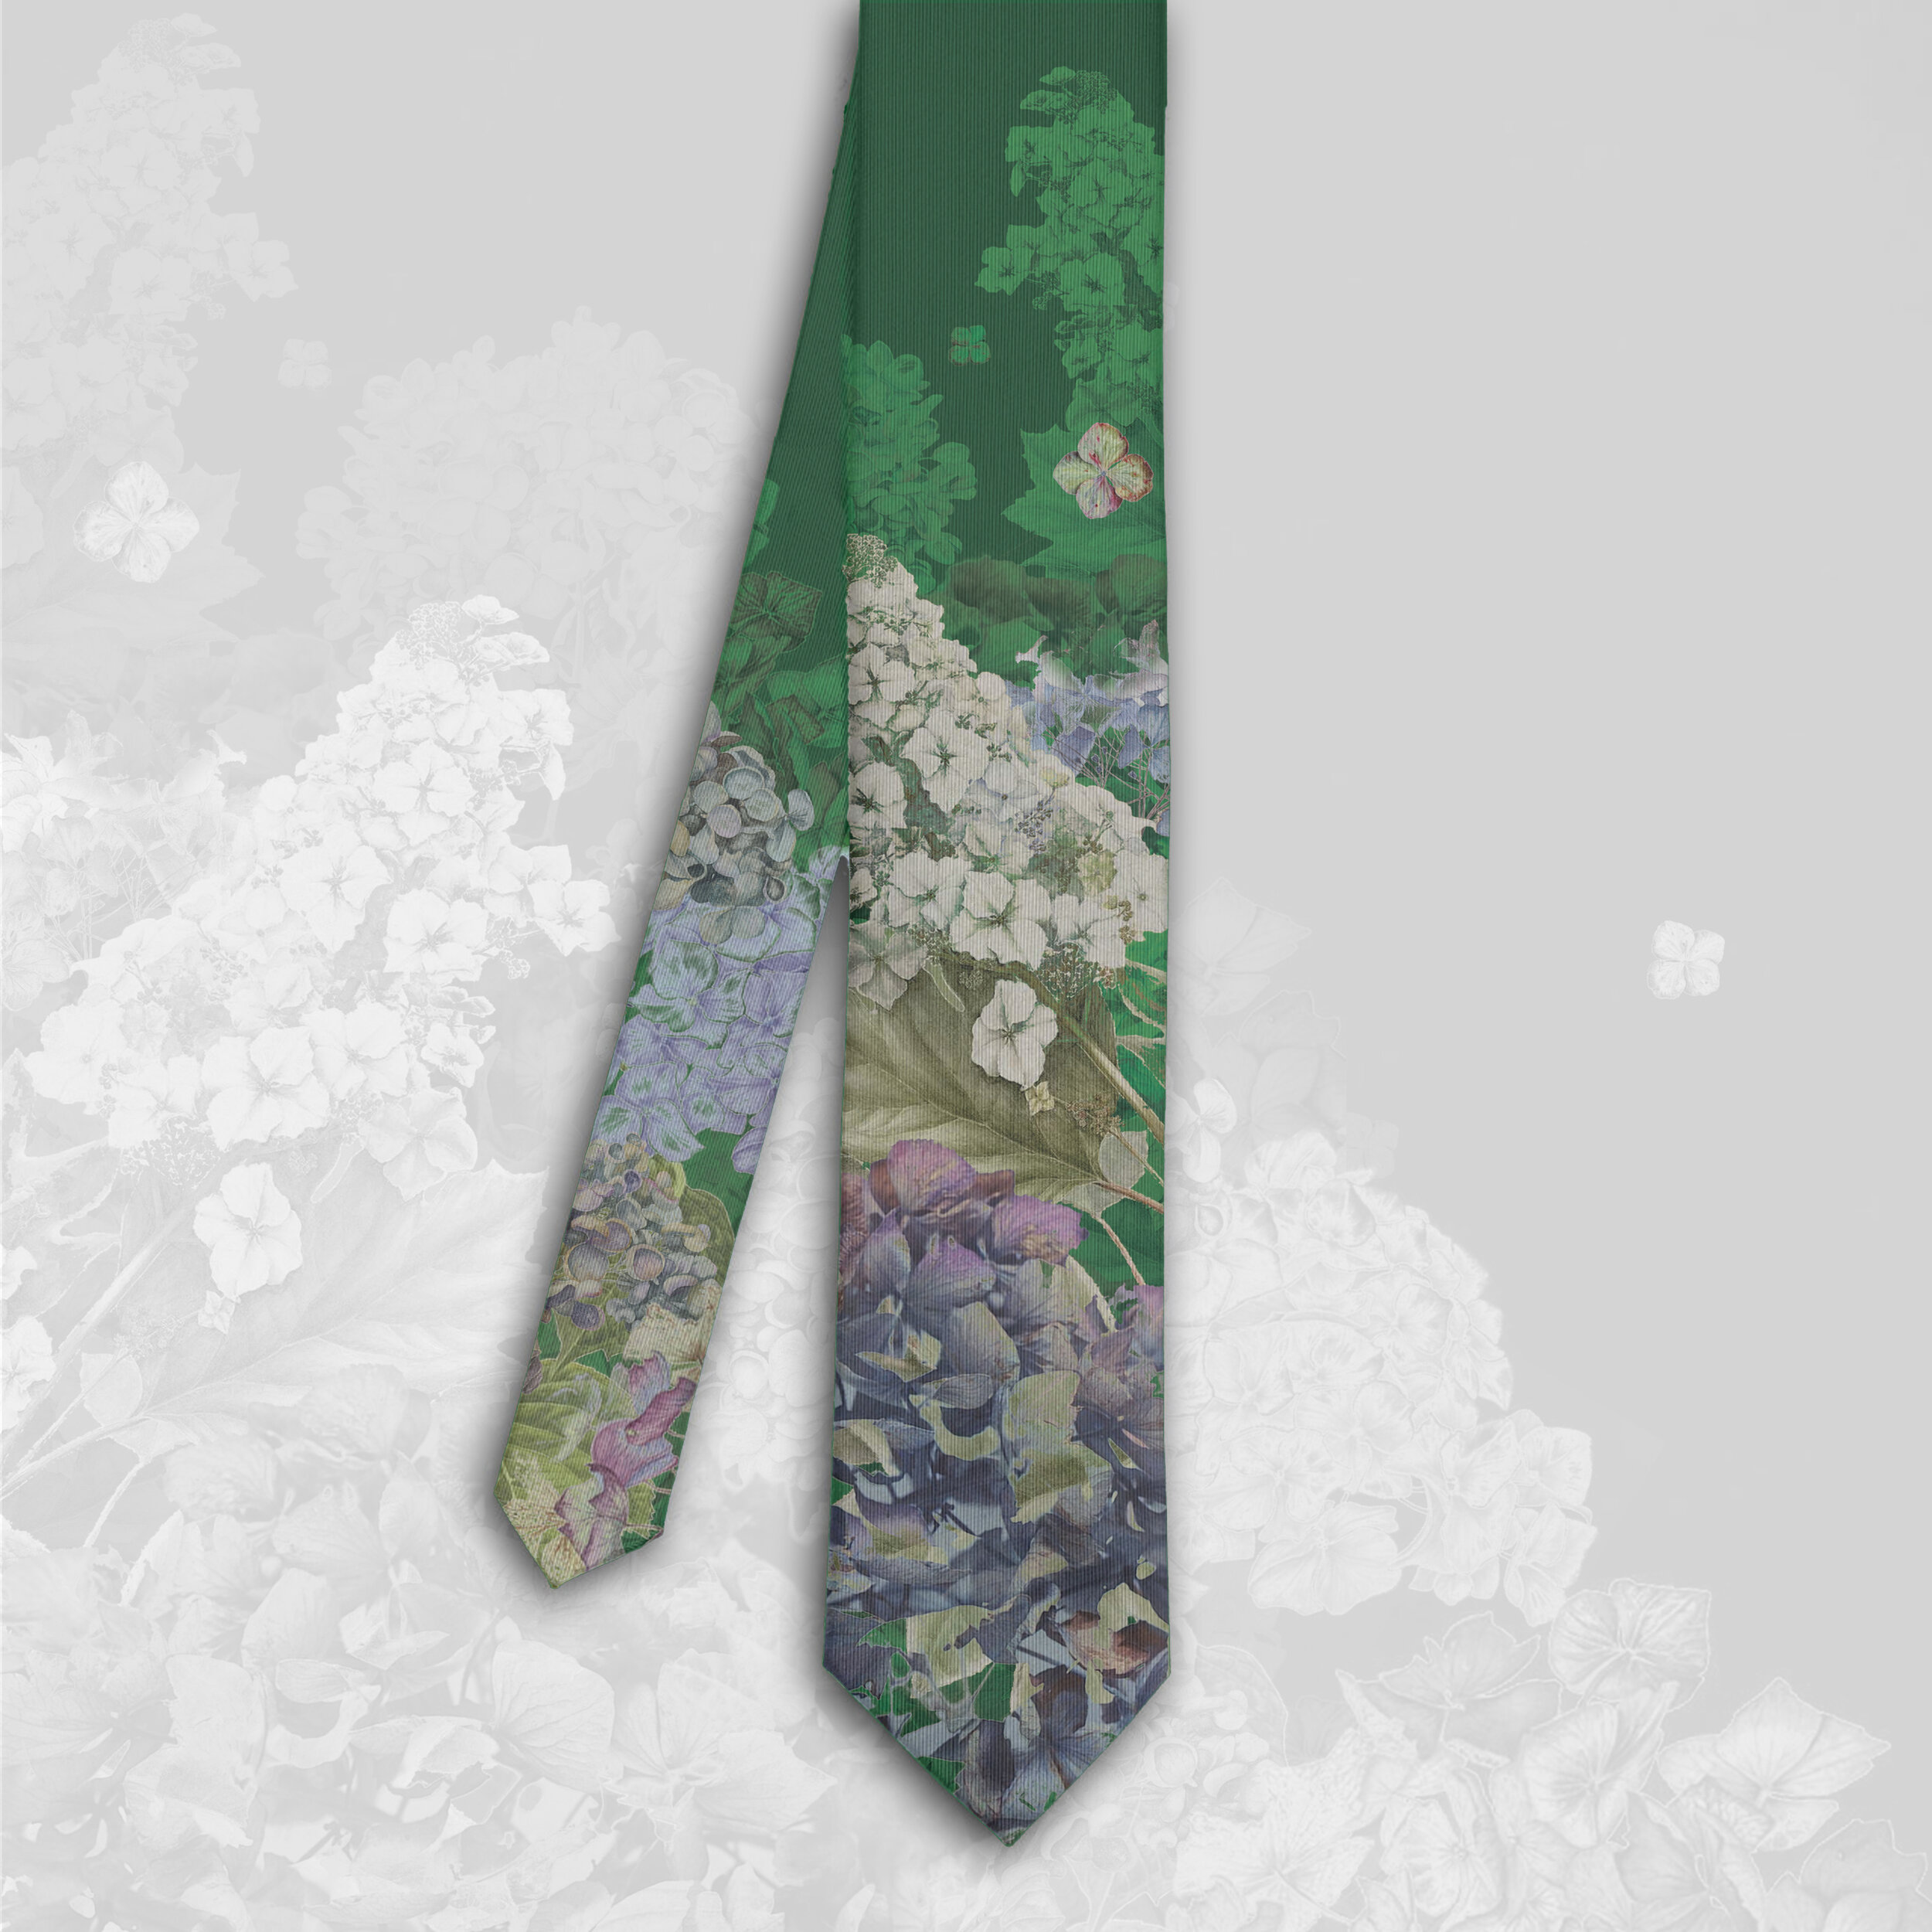 Hydrangea Tie.jpg